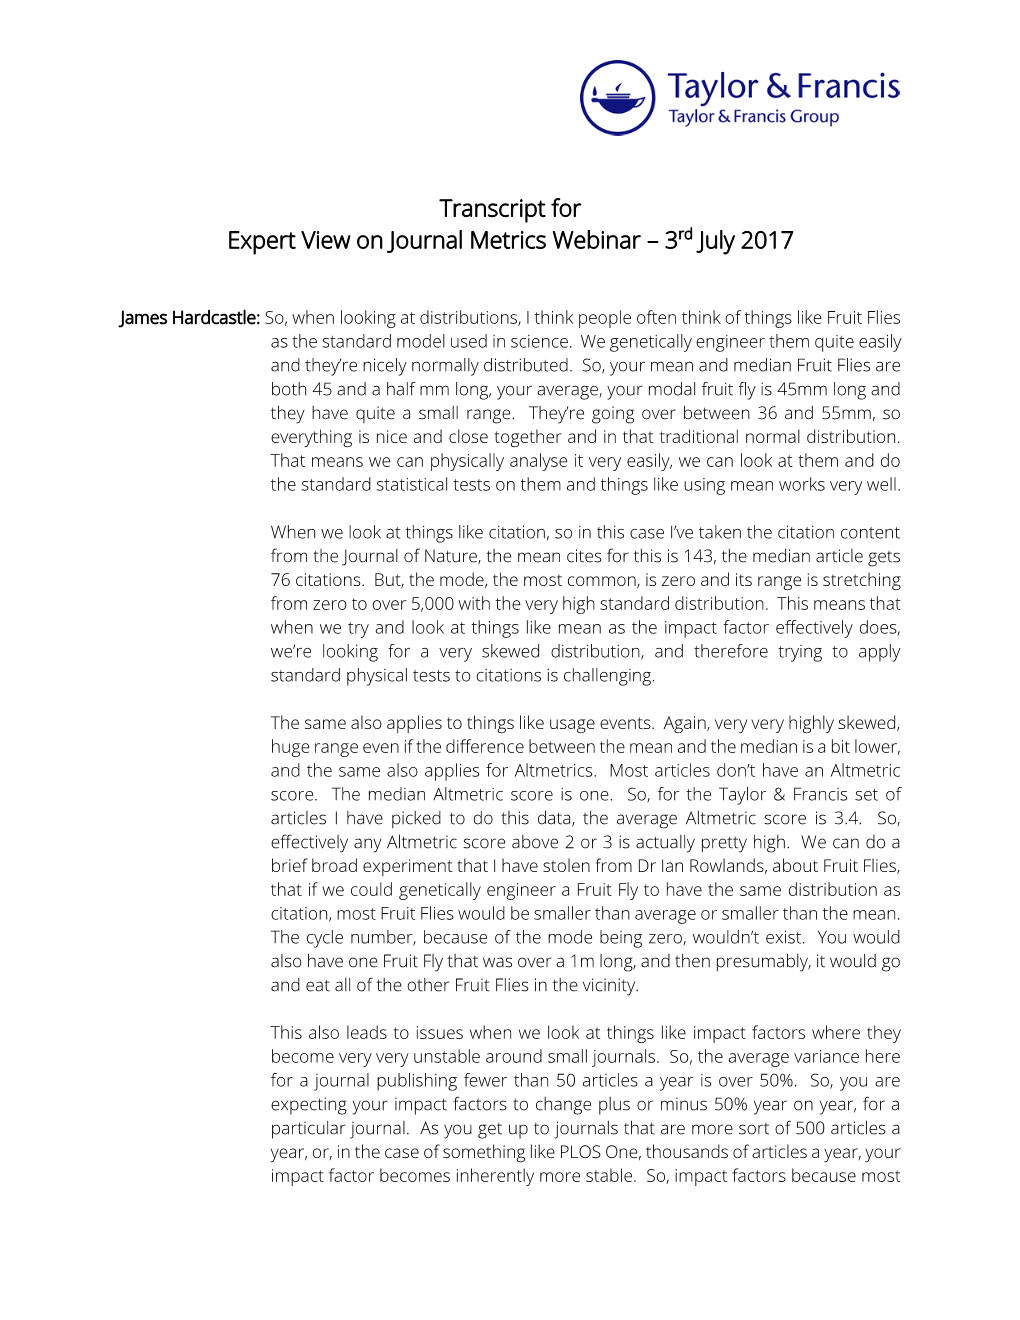 Transcript for Expert View on Journal Metrics Webinar – 3Rd July 2017